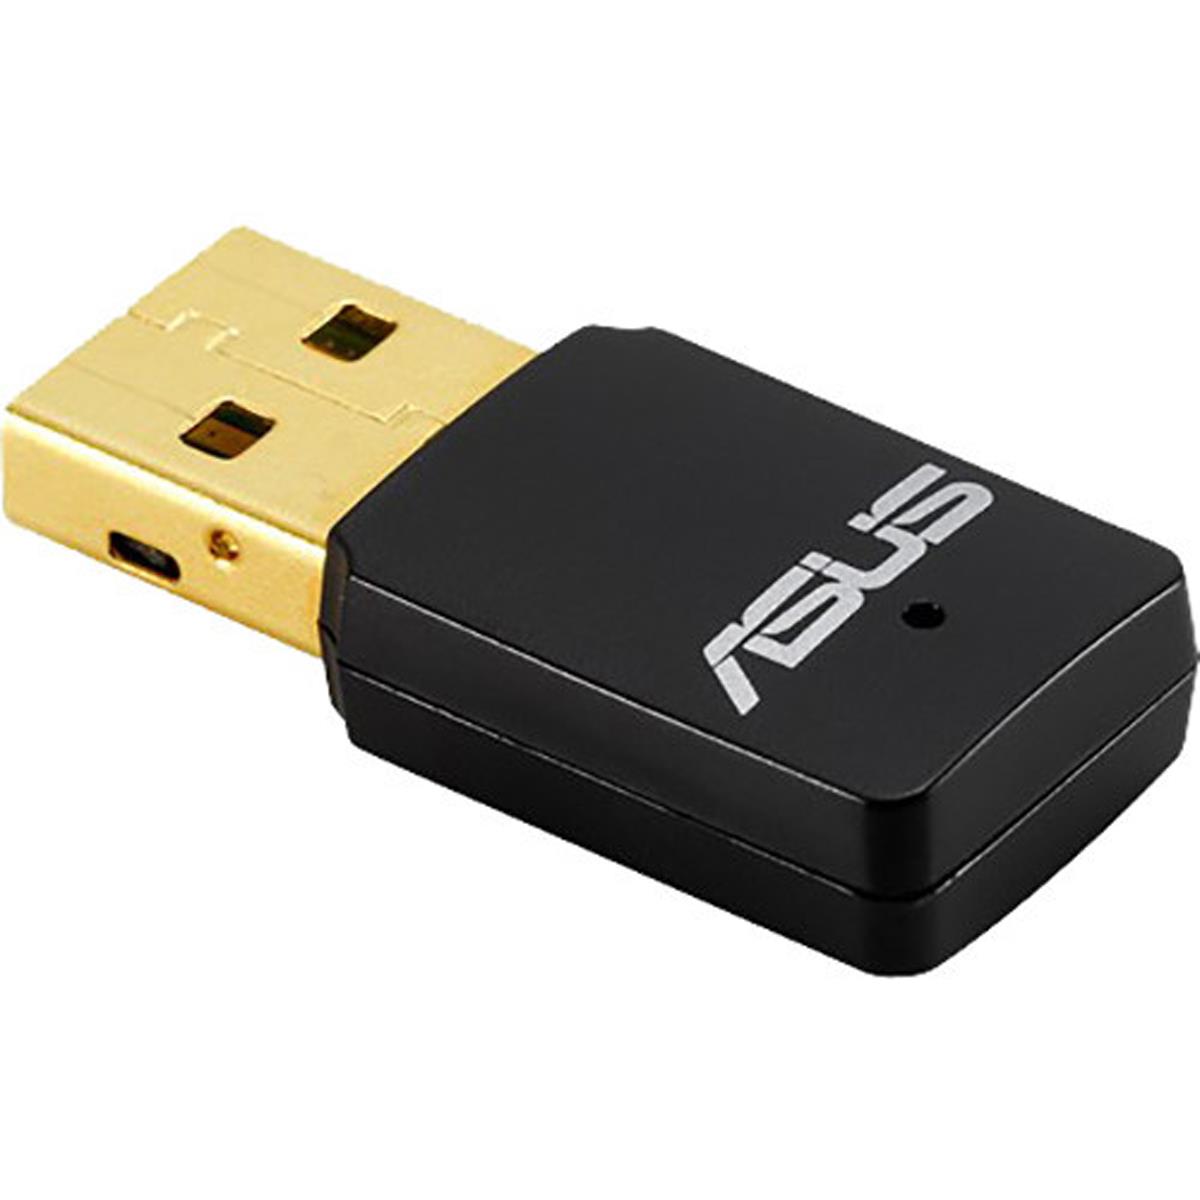 Image of ASUS USB-N13 C1 Wireless-N300 USB Adapter